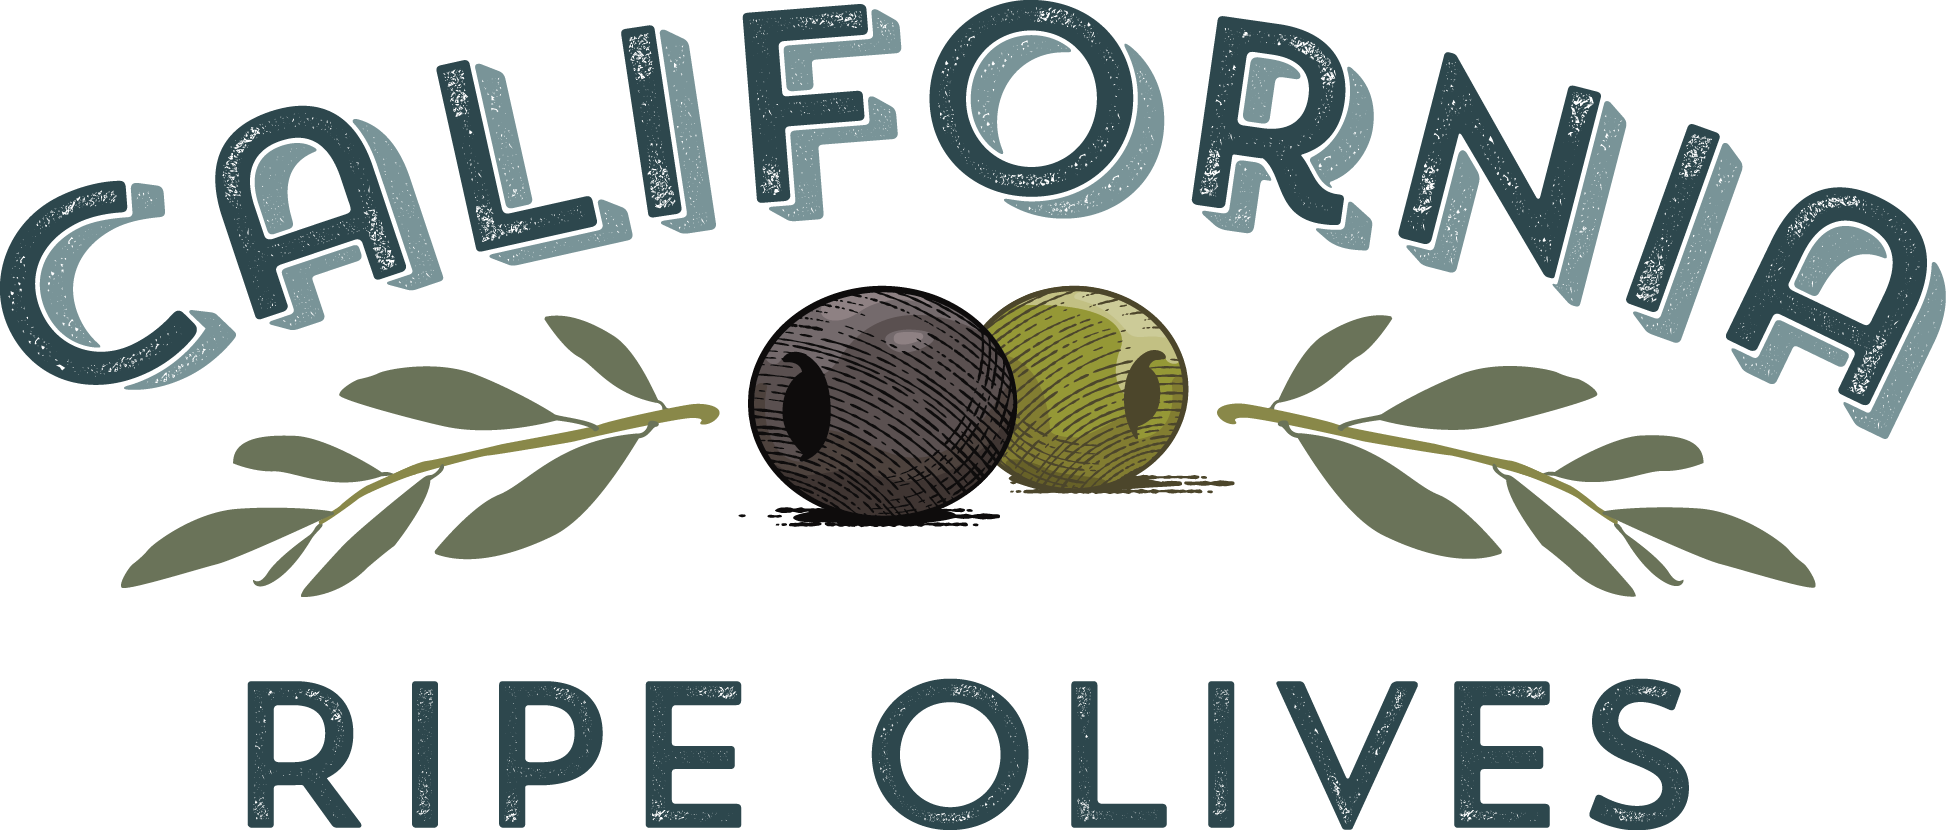 california ripe olives